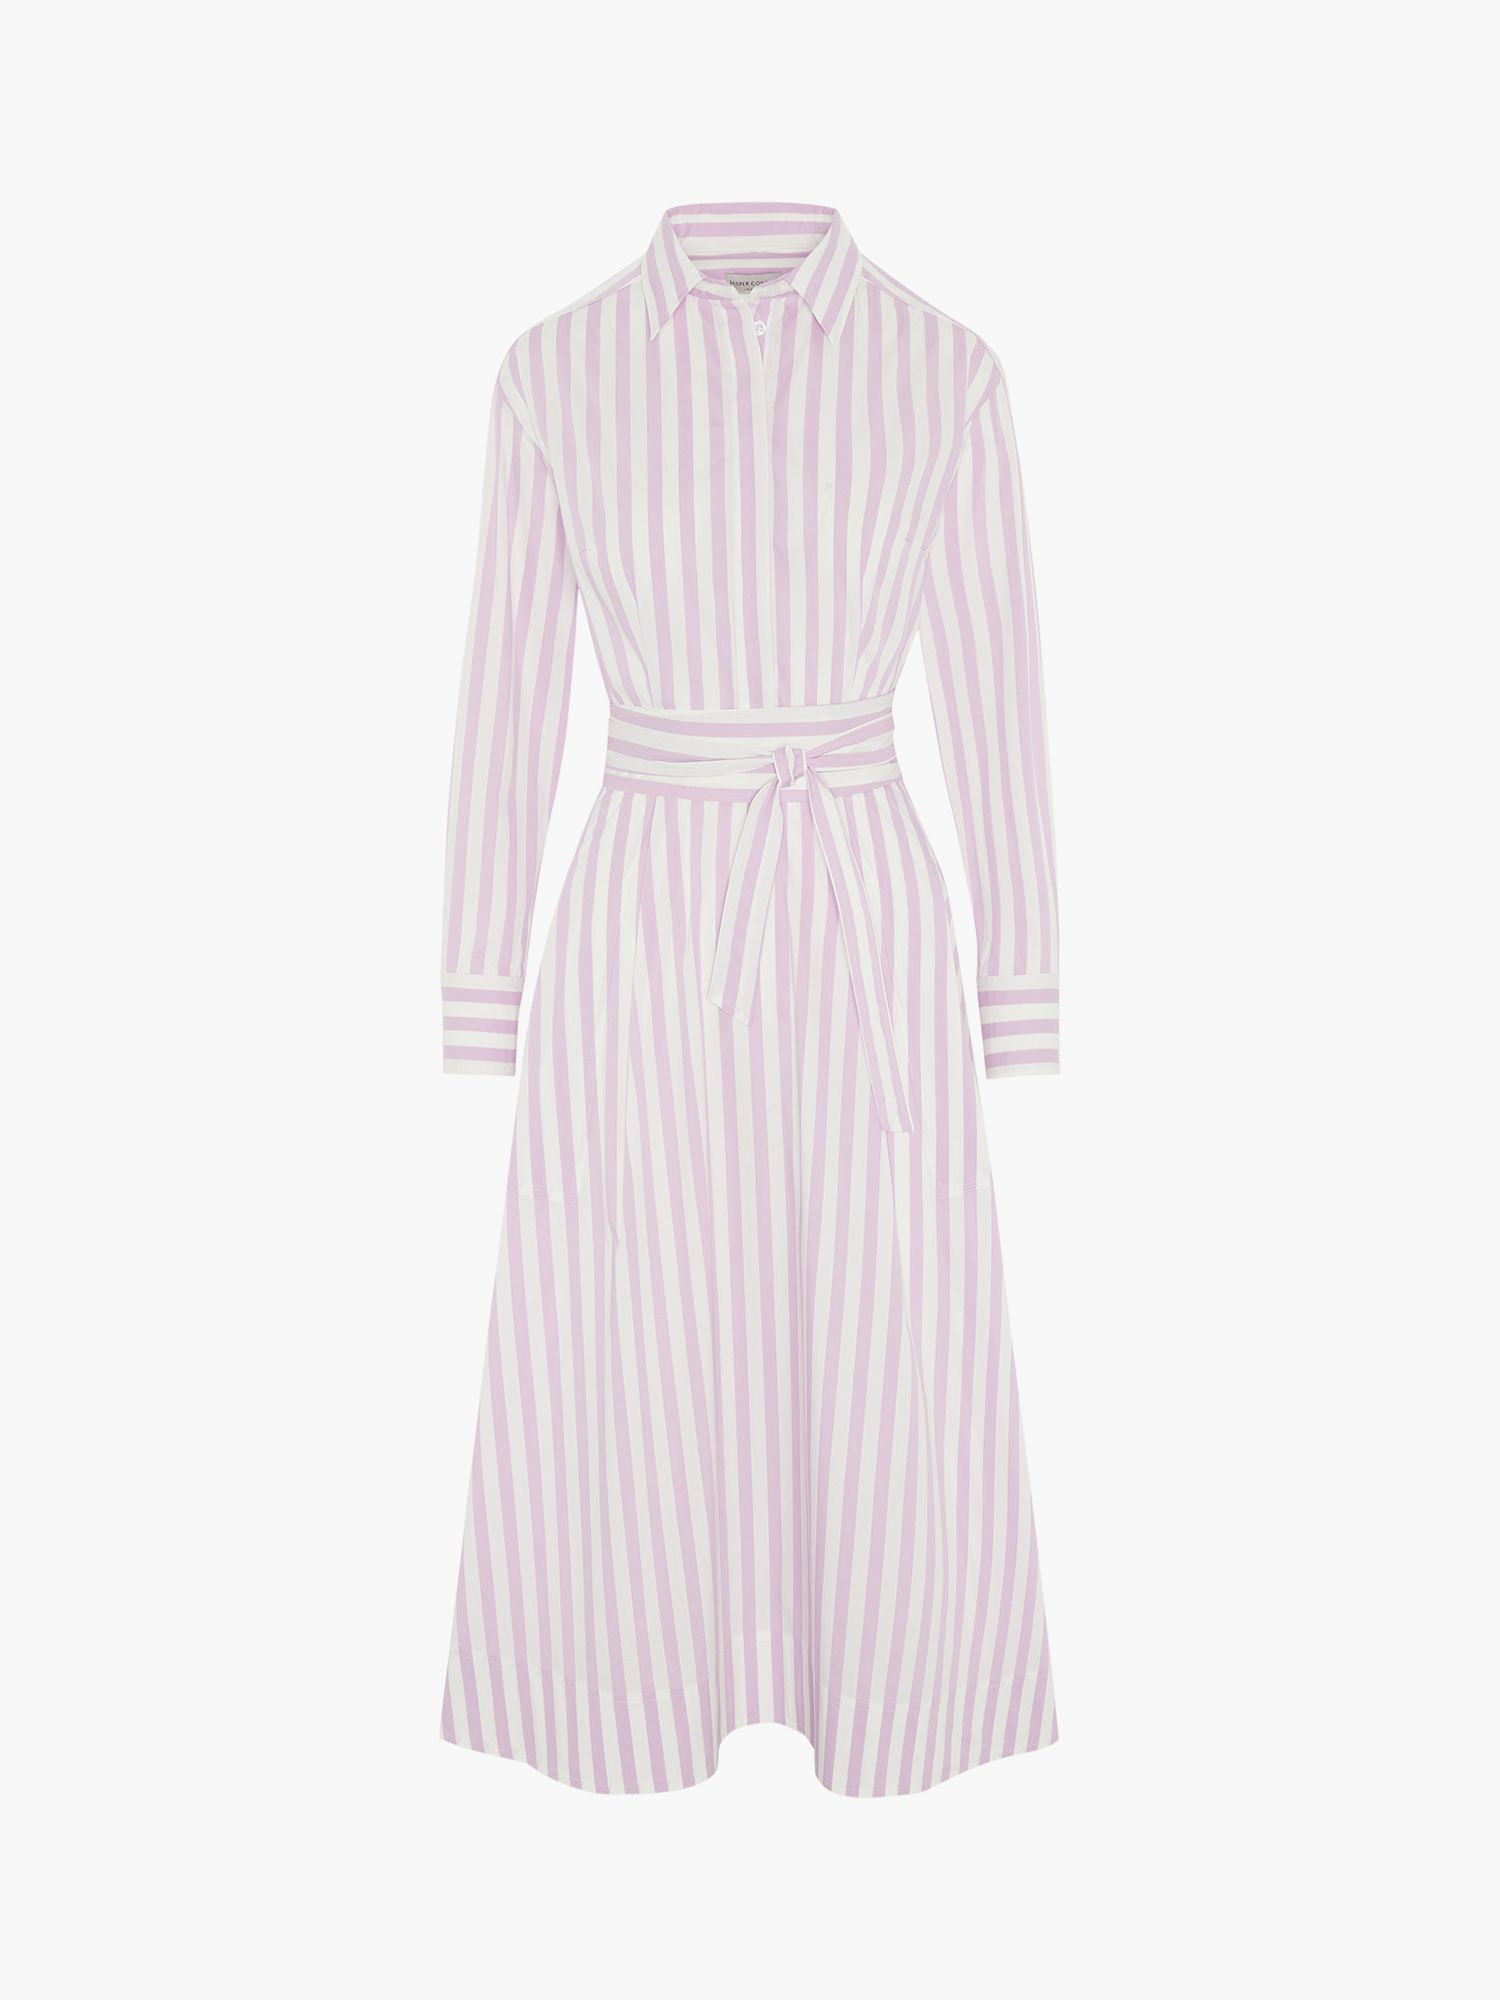 Jasper Conran Blythe Full Skirt Shirt Midi Dress, Lilac/Multi, 18